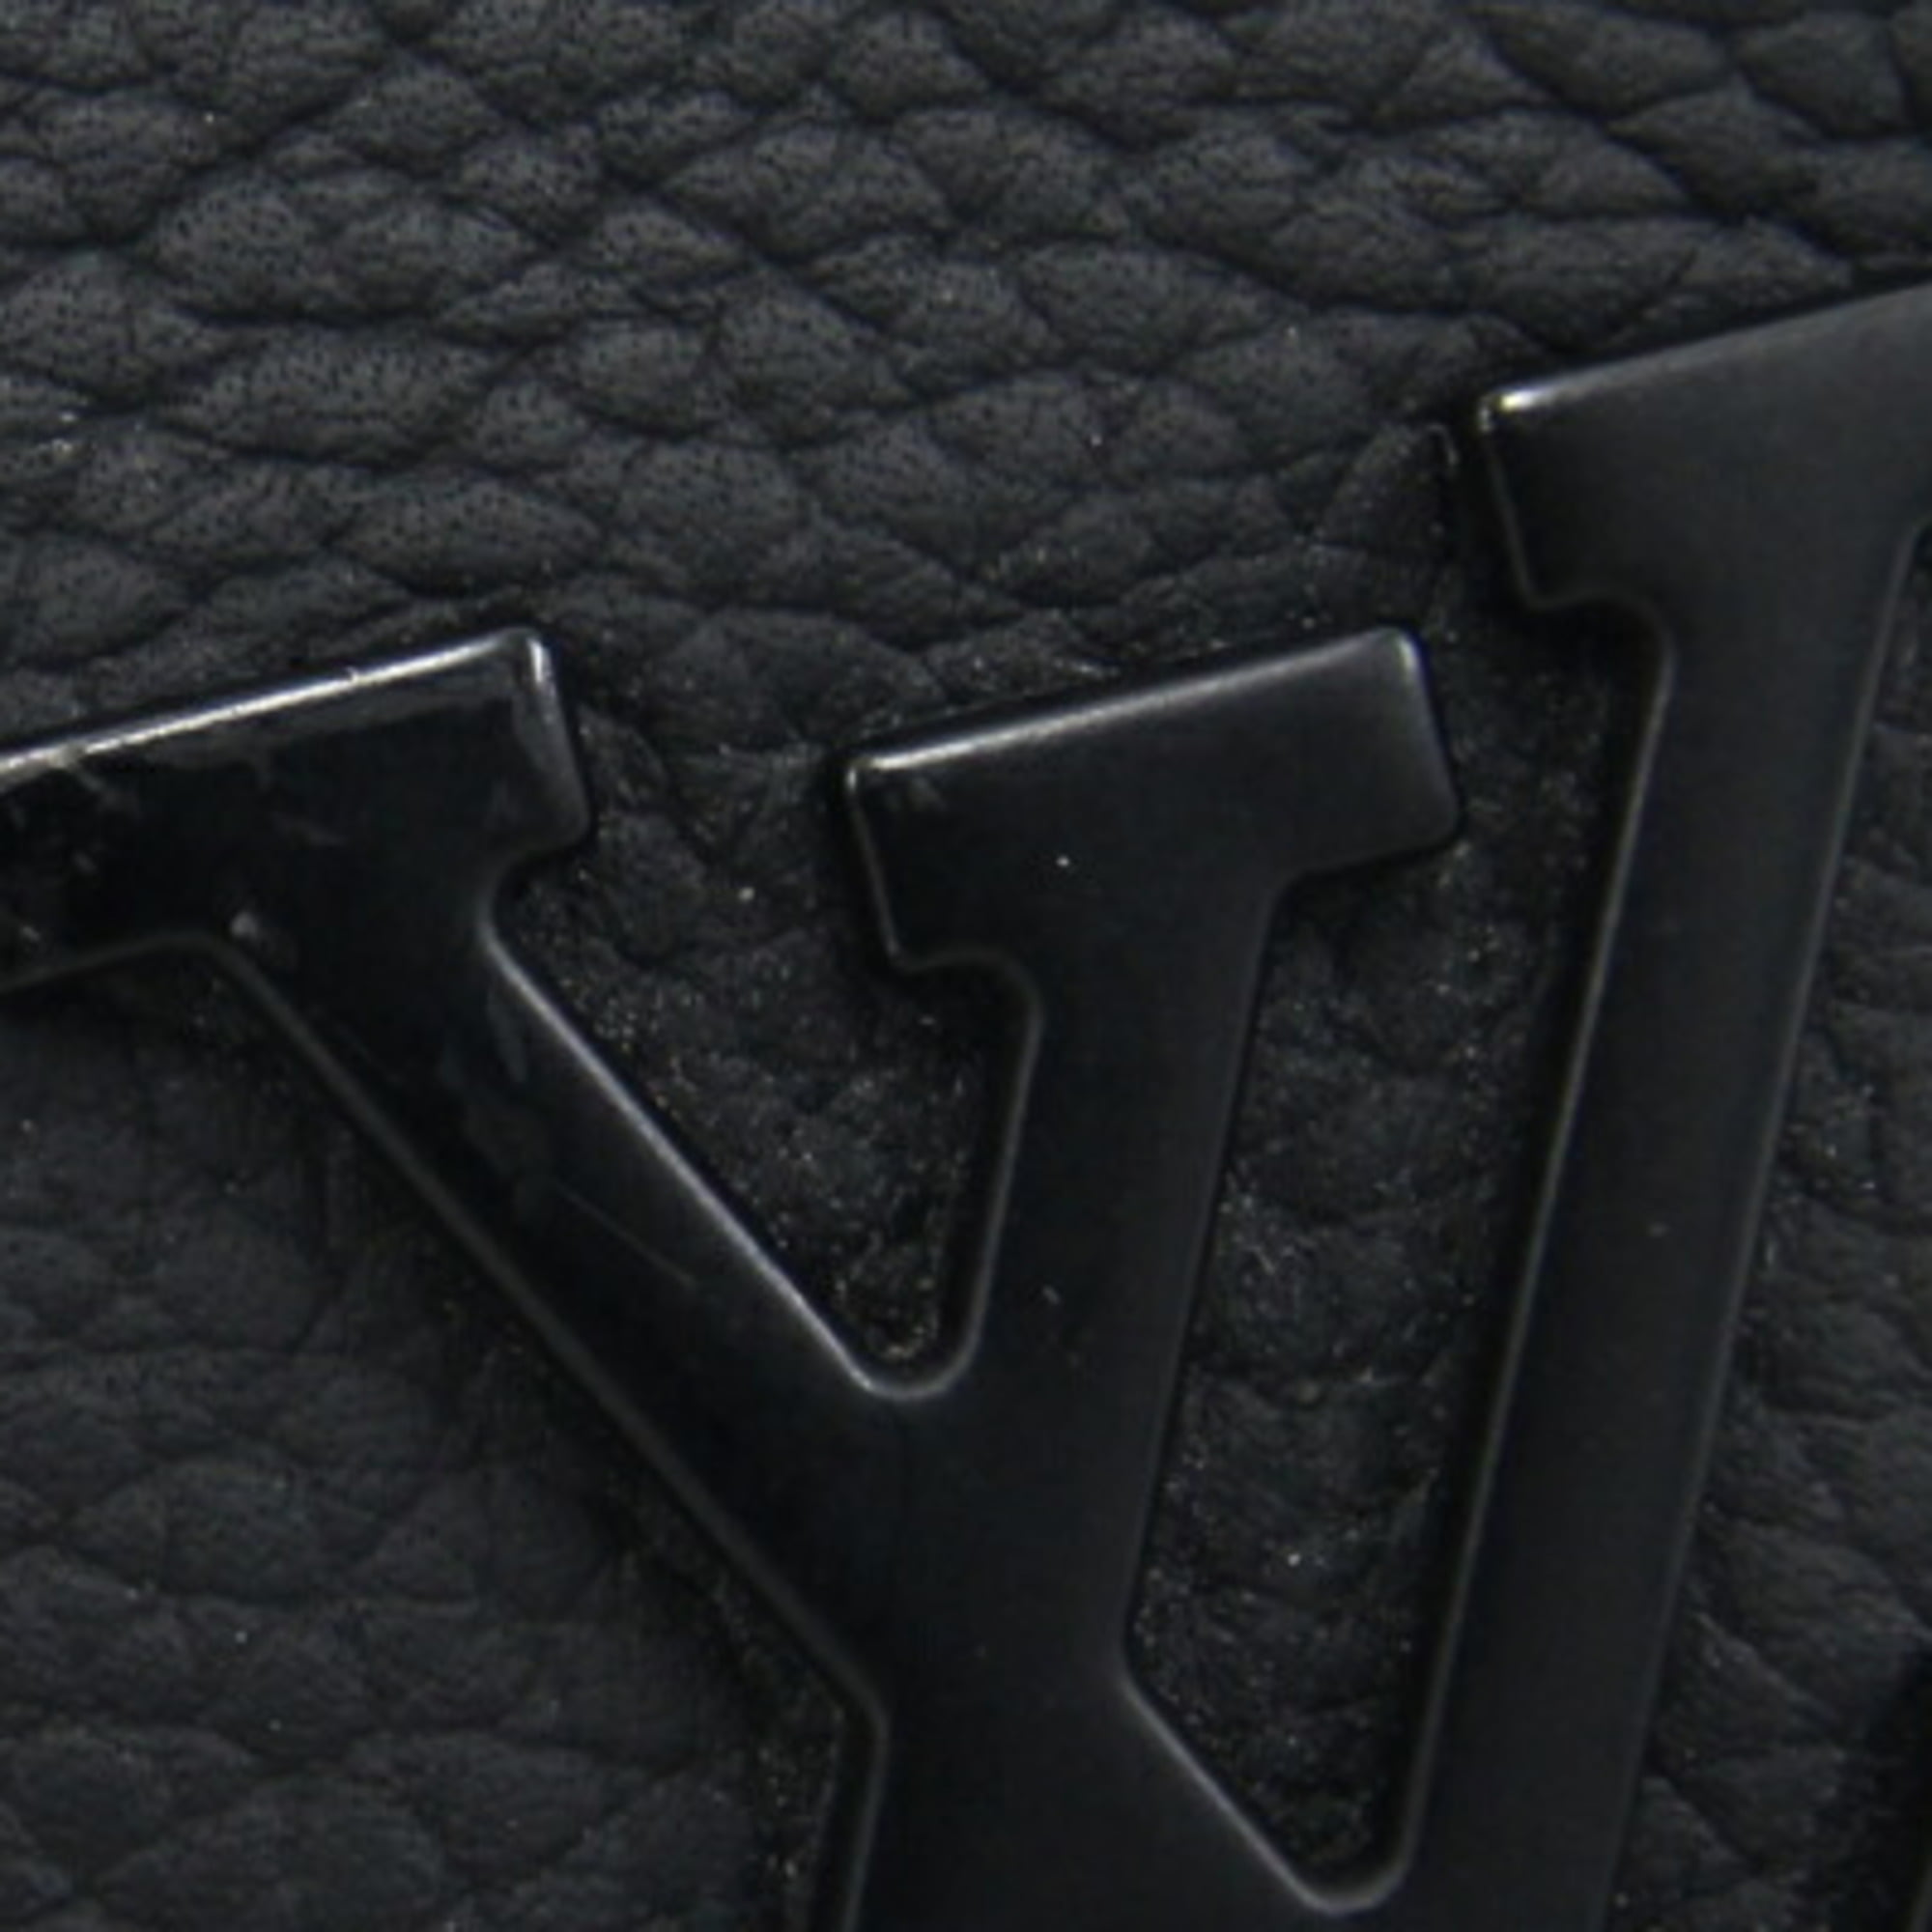 Authenticated Used Louis Vuitton Coin Case Aerogram Pochette Cle M81031  Noir Leather Holder Key Card Men's All LOUIS VUITTON 